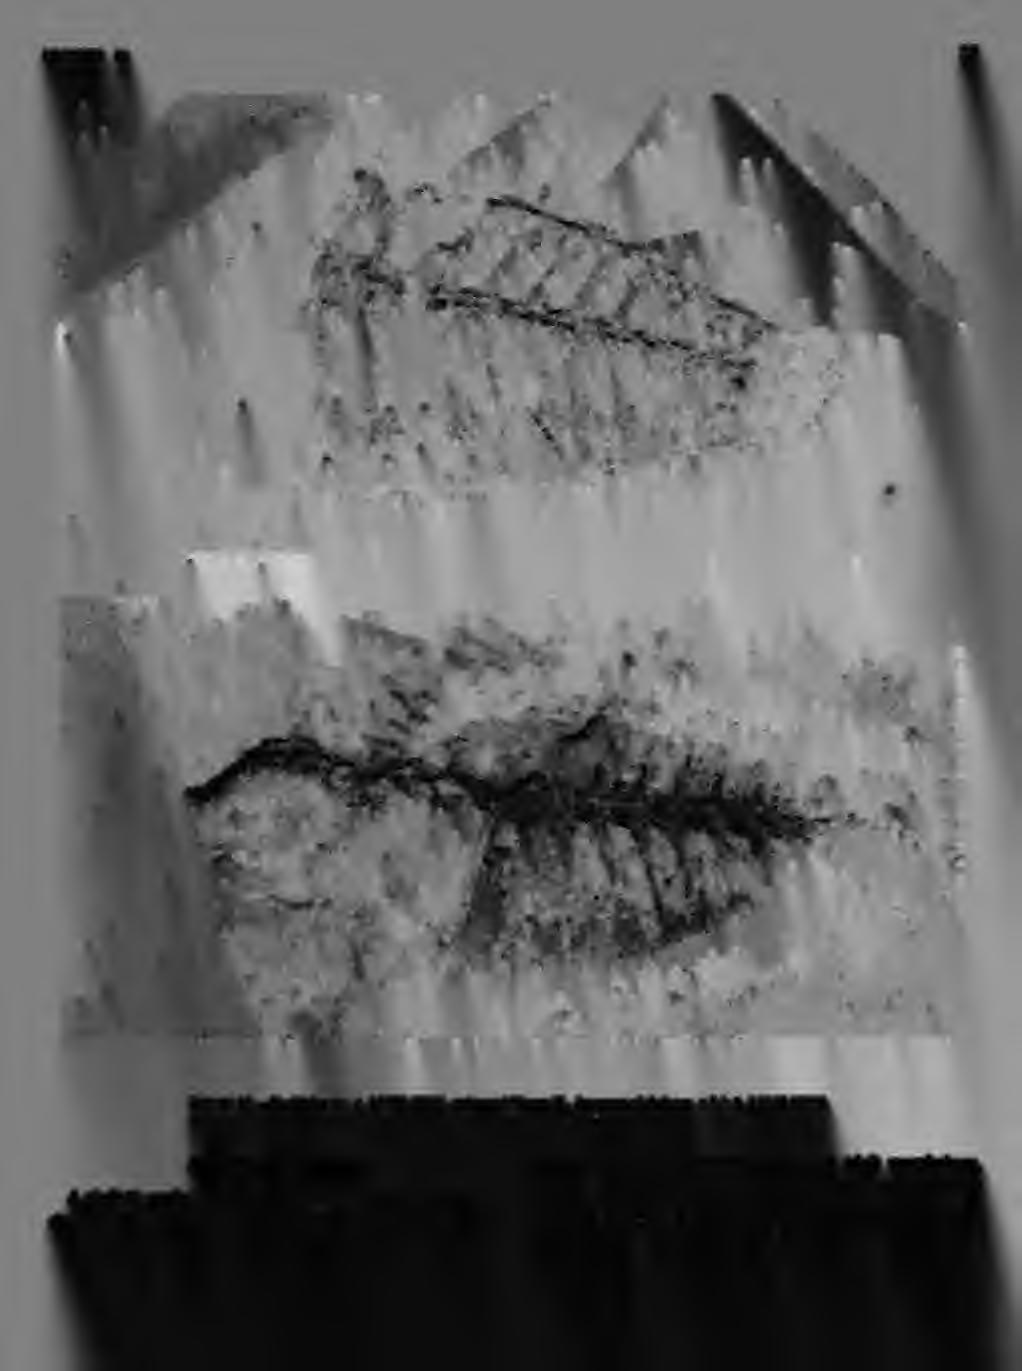 1; B, LUVP 12010, estimated 93 mm SL, fragment of skeleton, x 2.